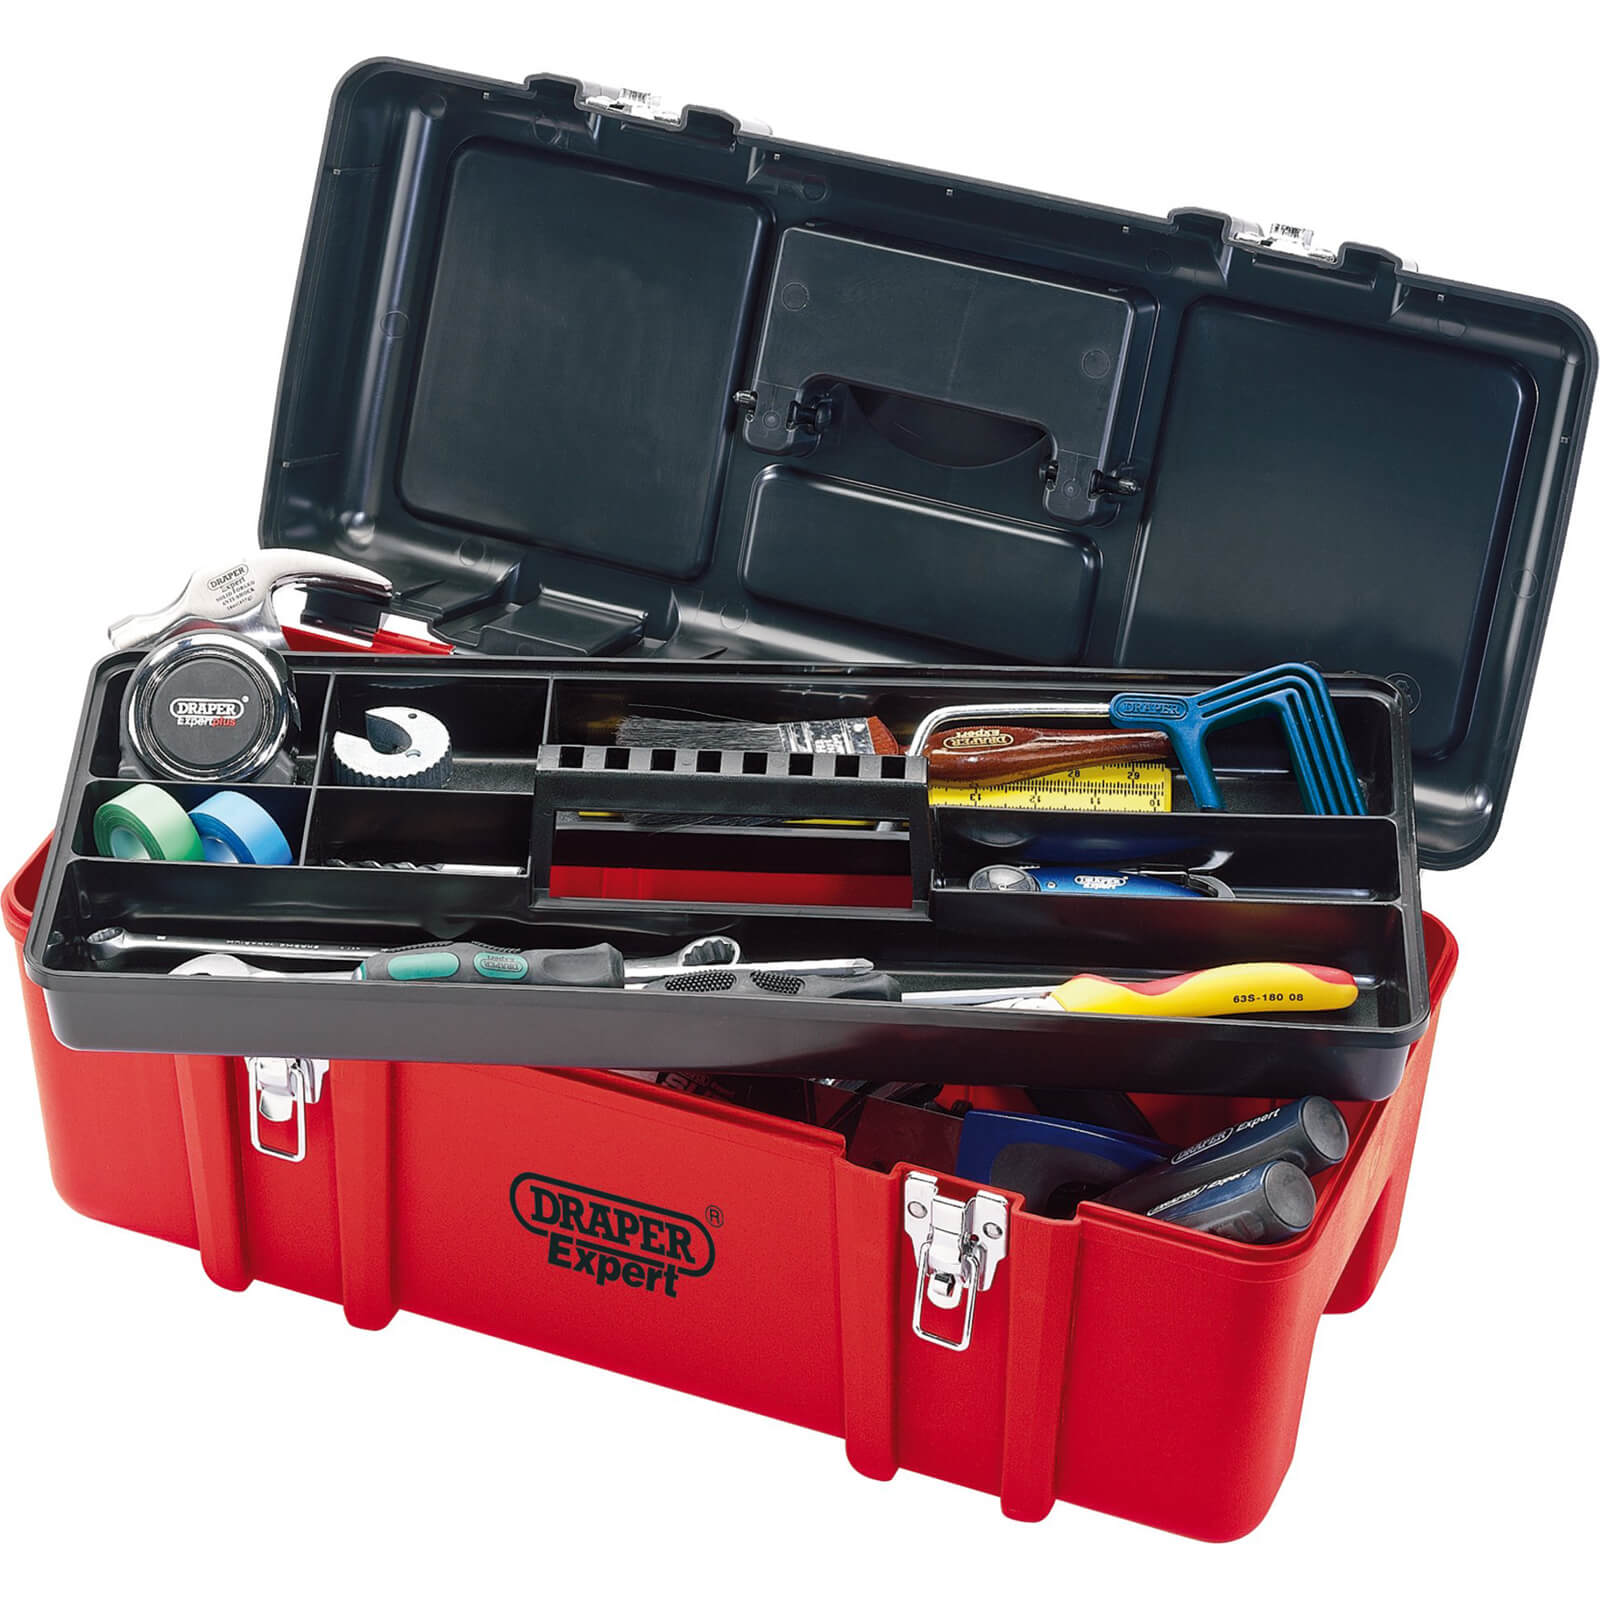 Image of Draper Expert Plastic Tool Box